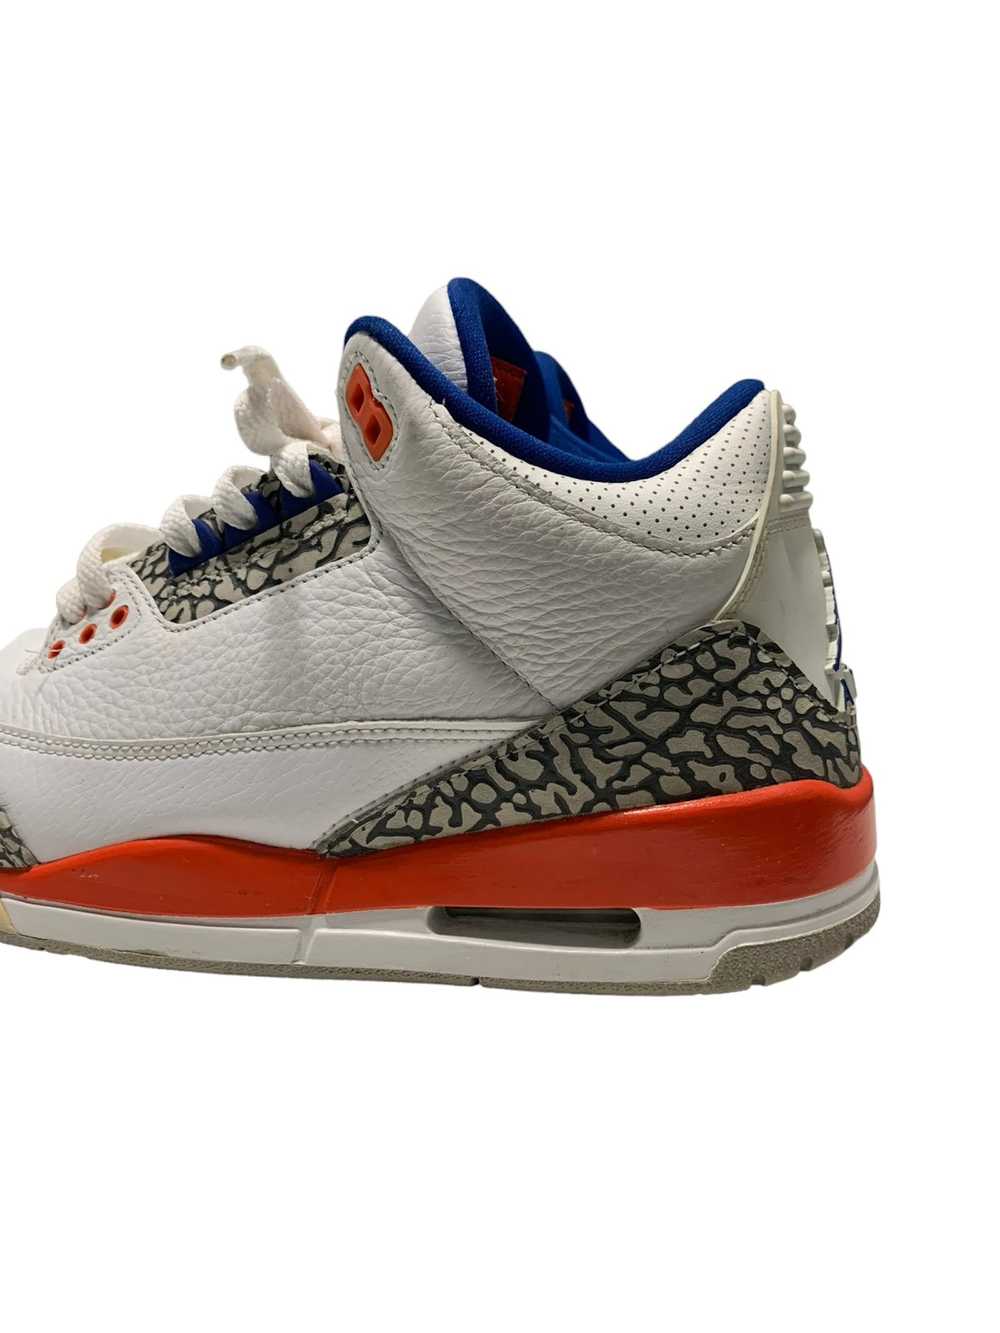 Jordan Brand Air Jordan 3 Retro 'Knicks' - image 3